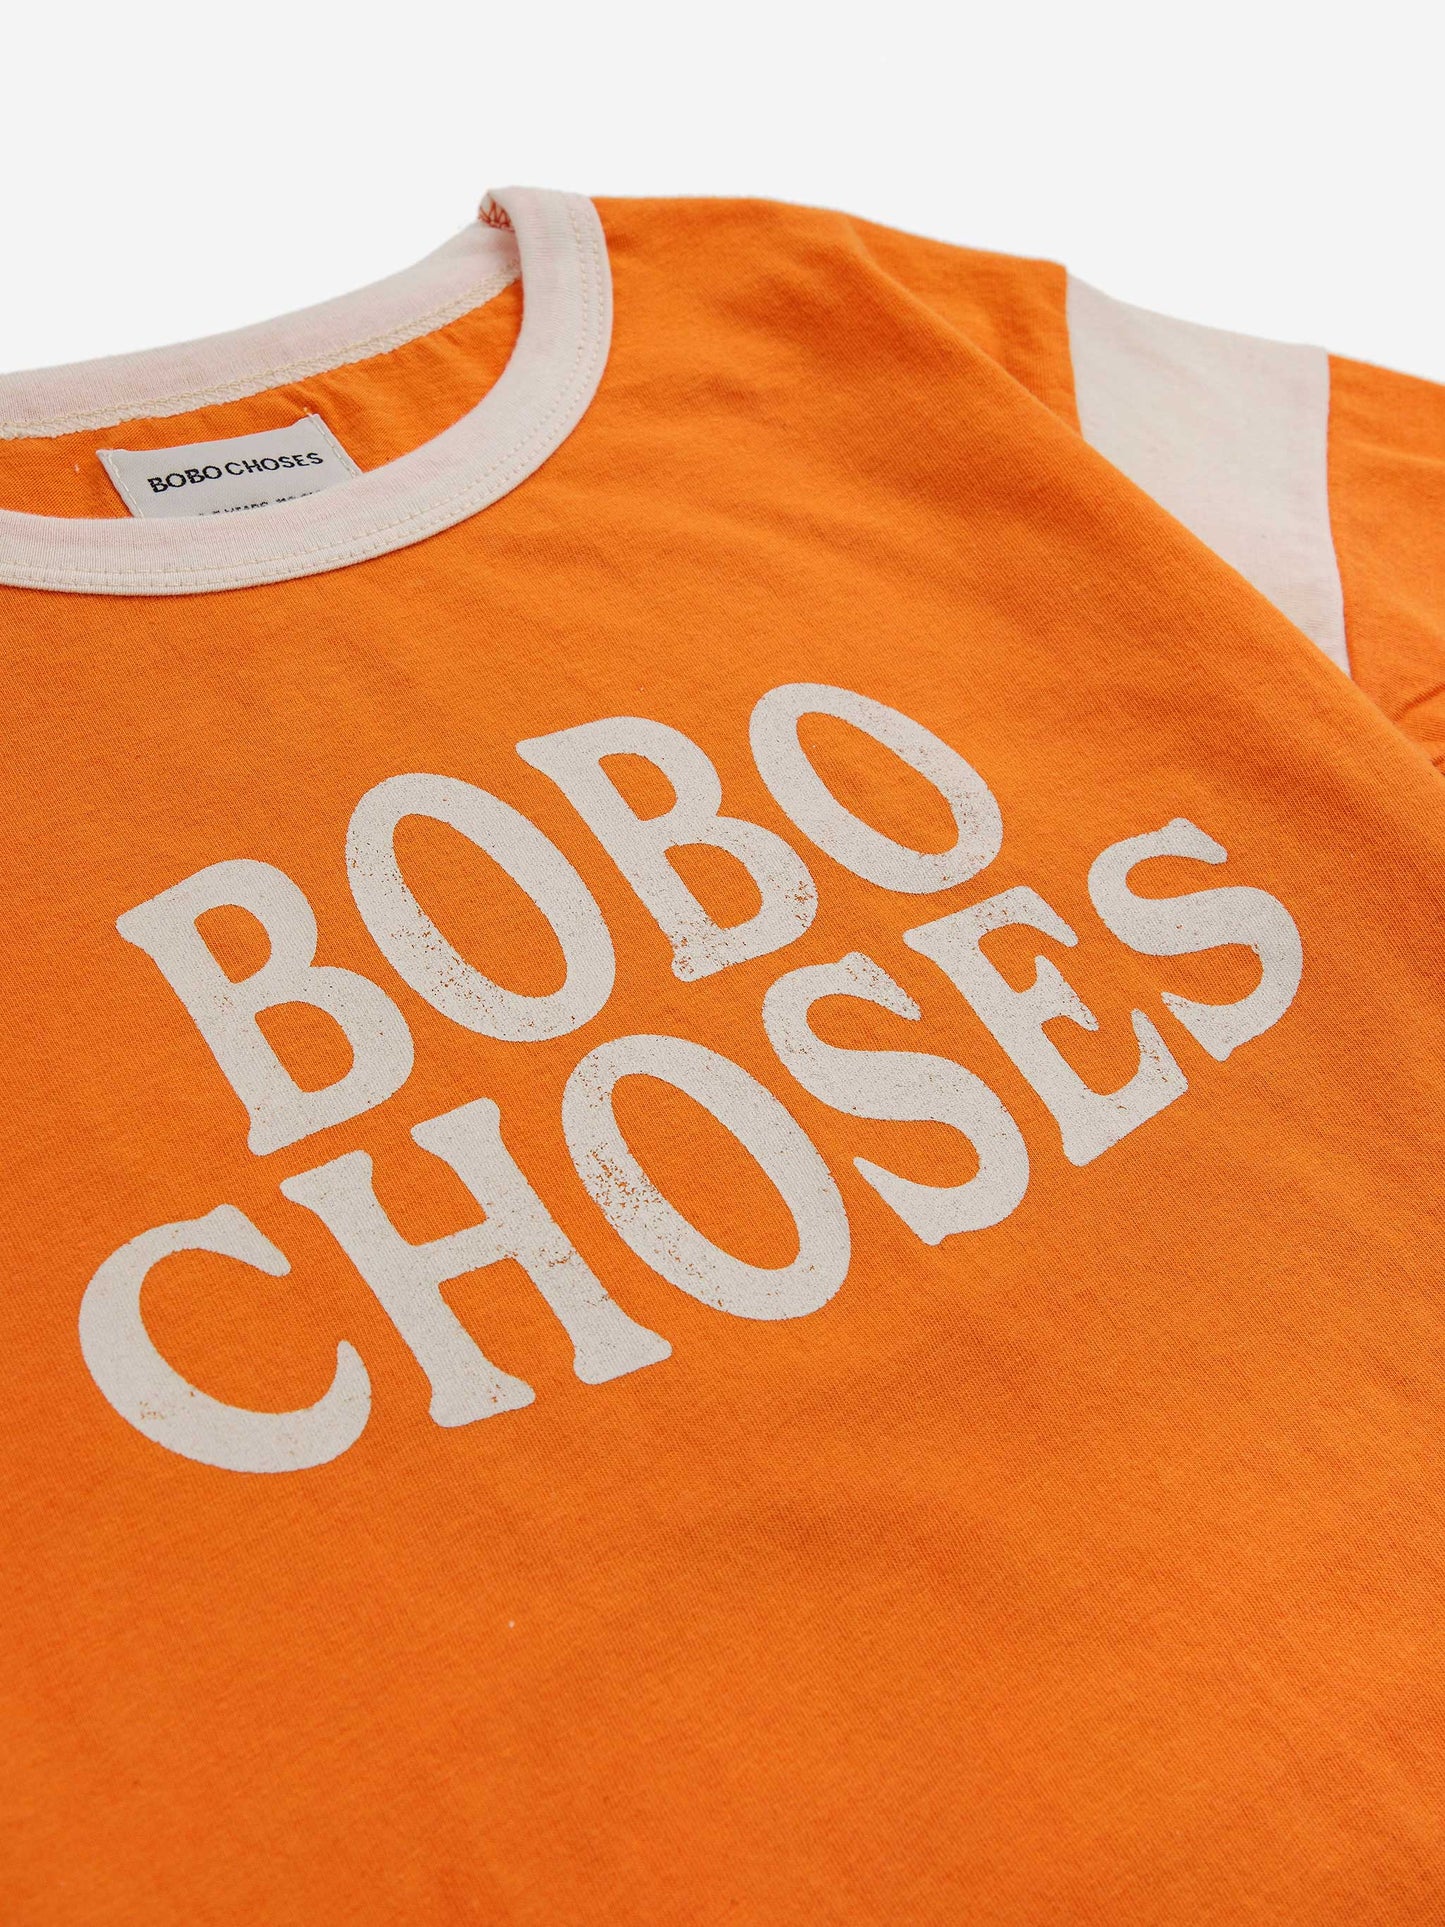 Bobo Choses T-Shirts